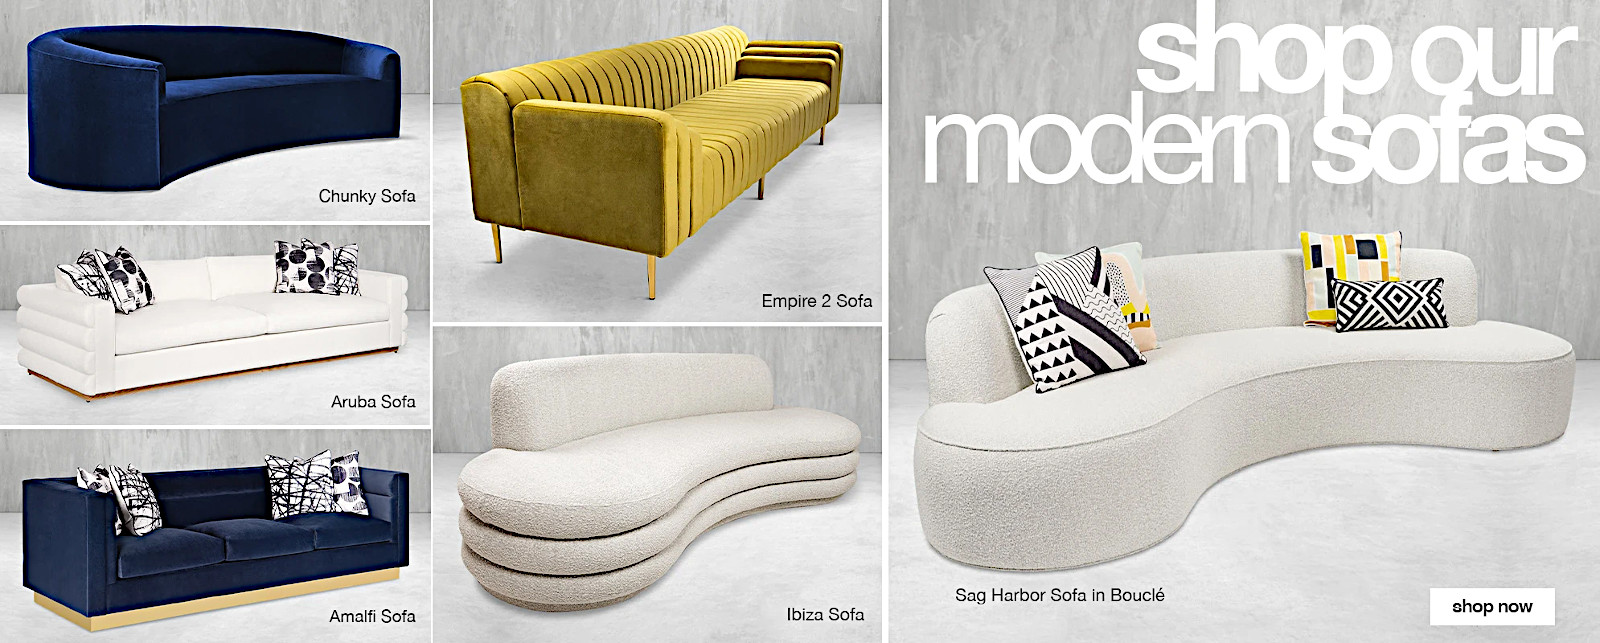 Reduced Price modern sofas